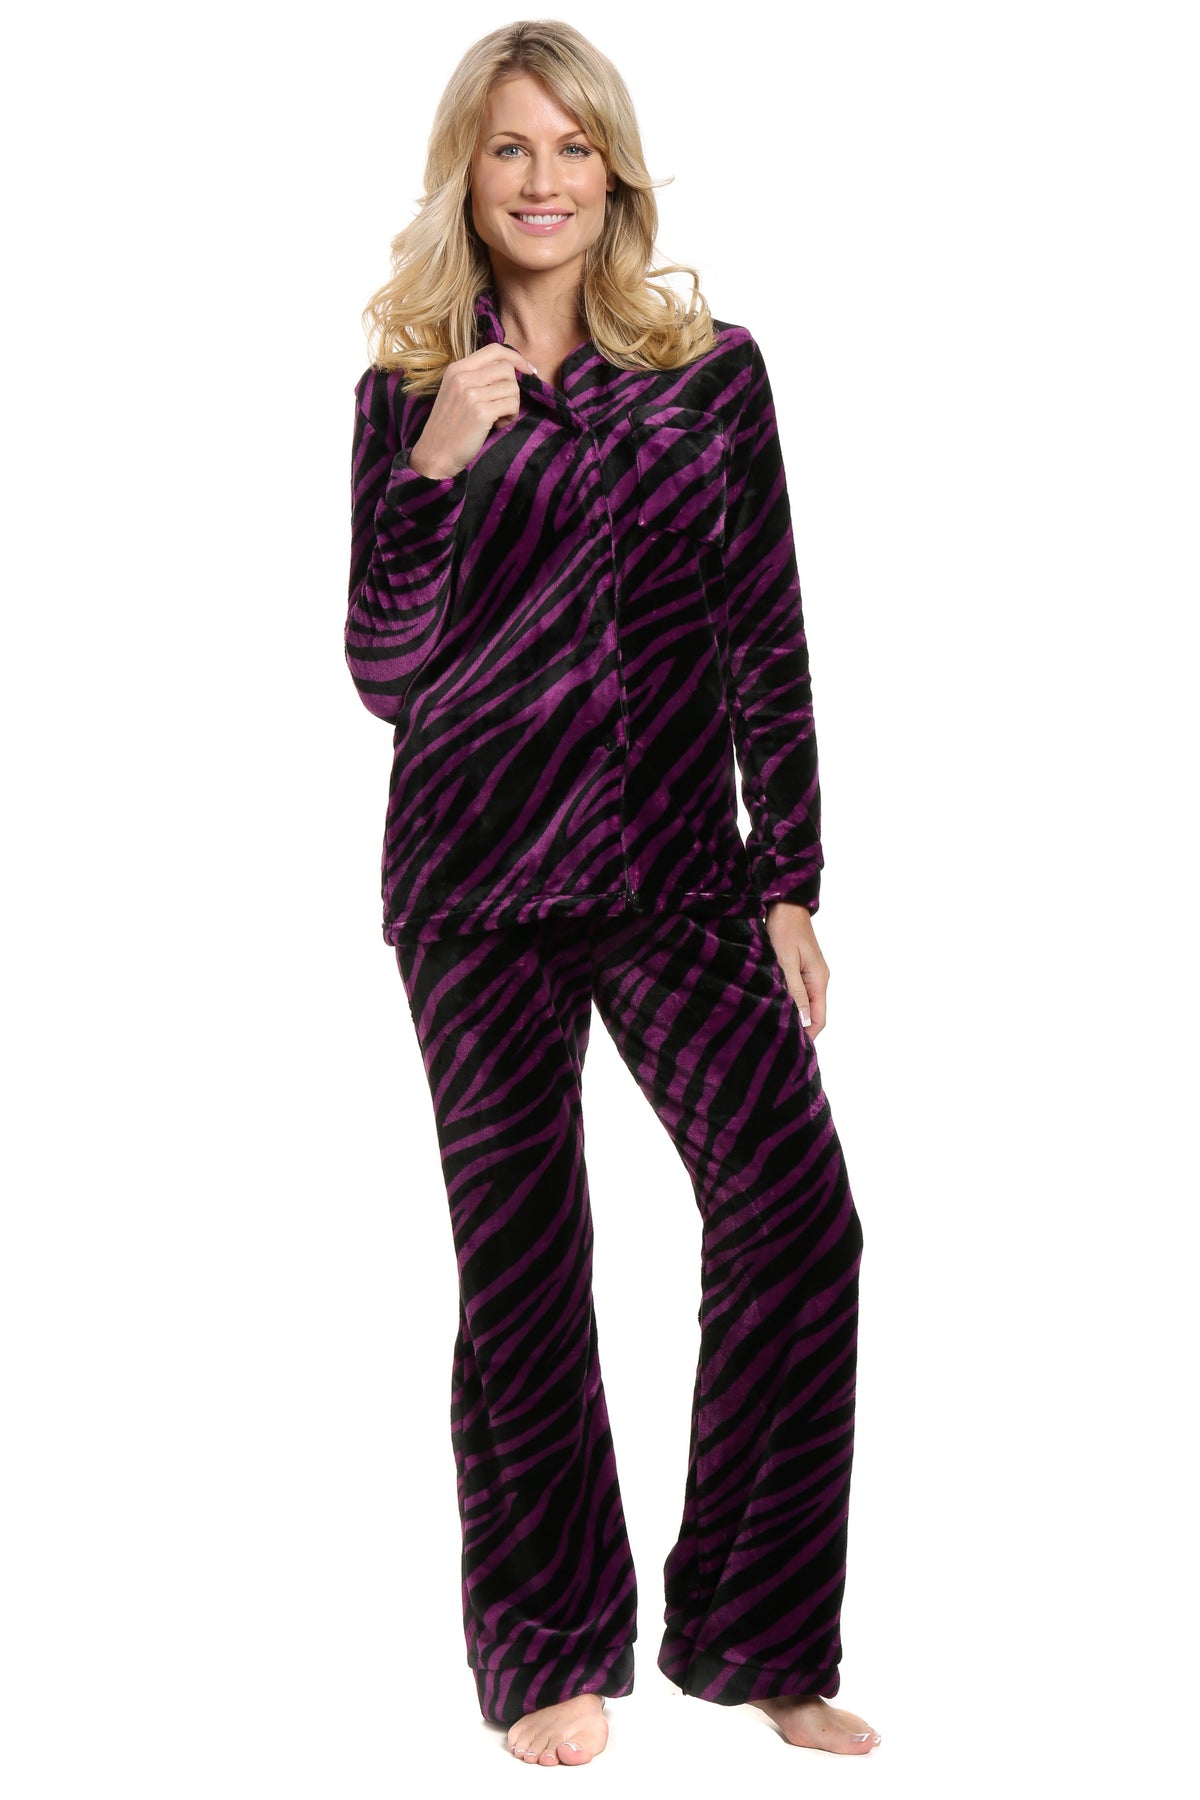 Womens Lush Butterfleece Pajama Set - Zebra - Purple/Black